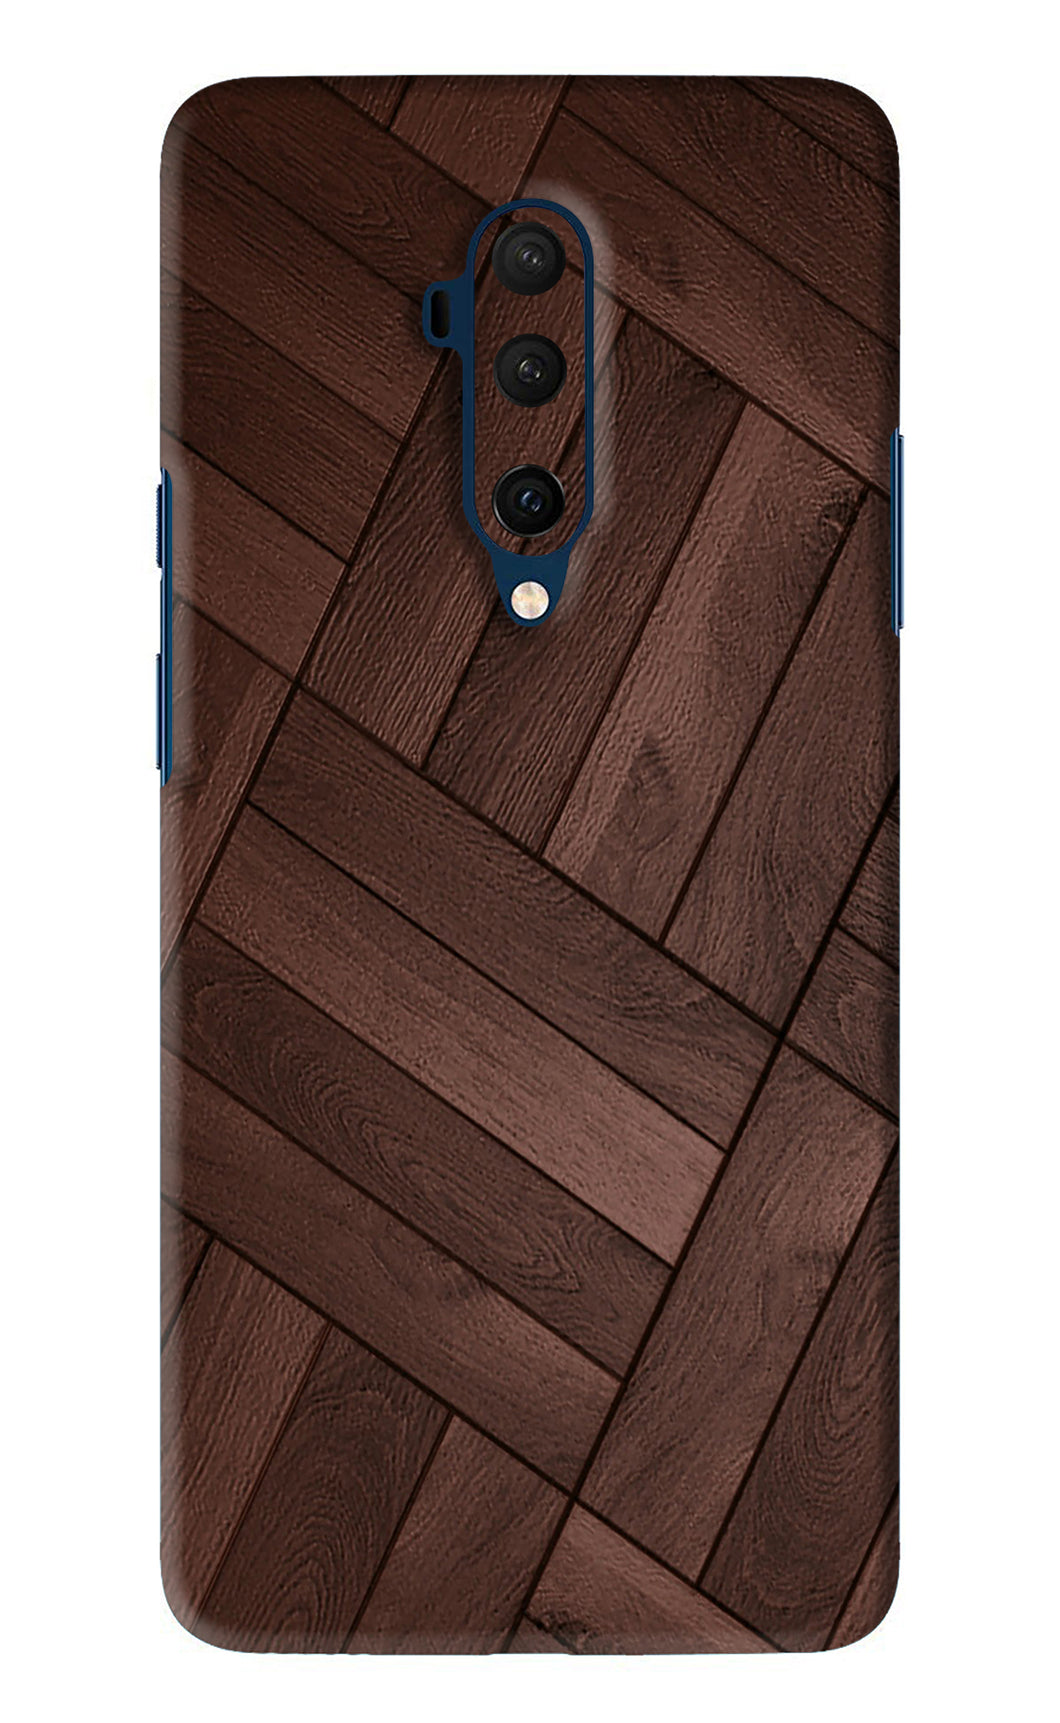 Wooden Texture Design OnePlus 7T Pro Back Skin Wrap